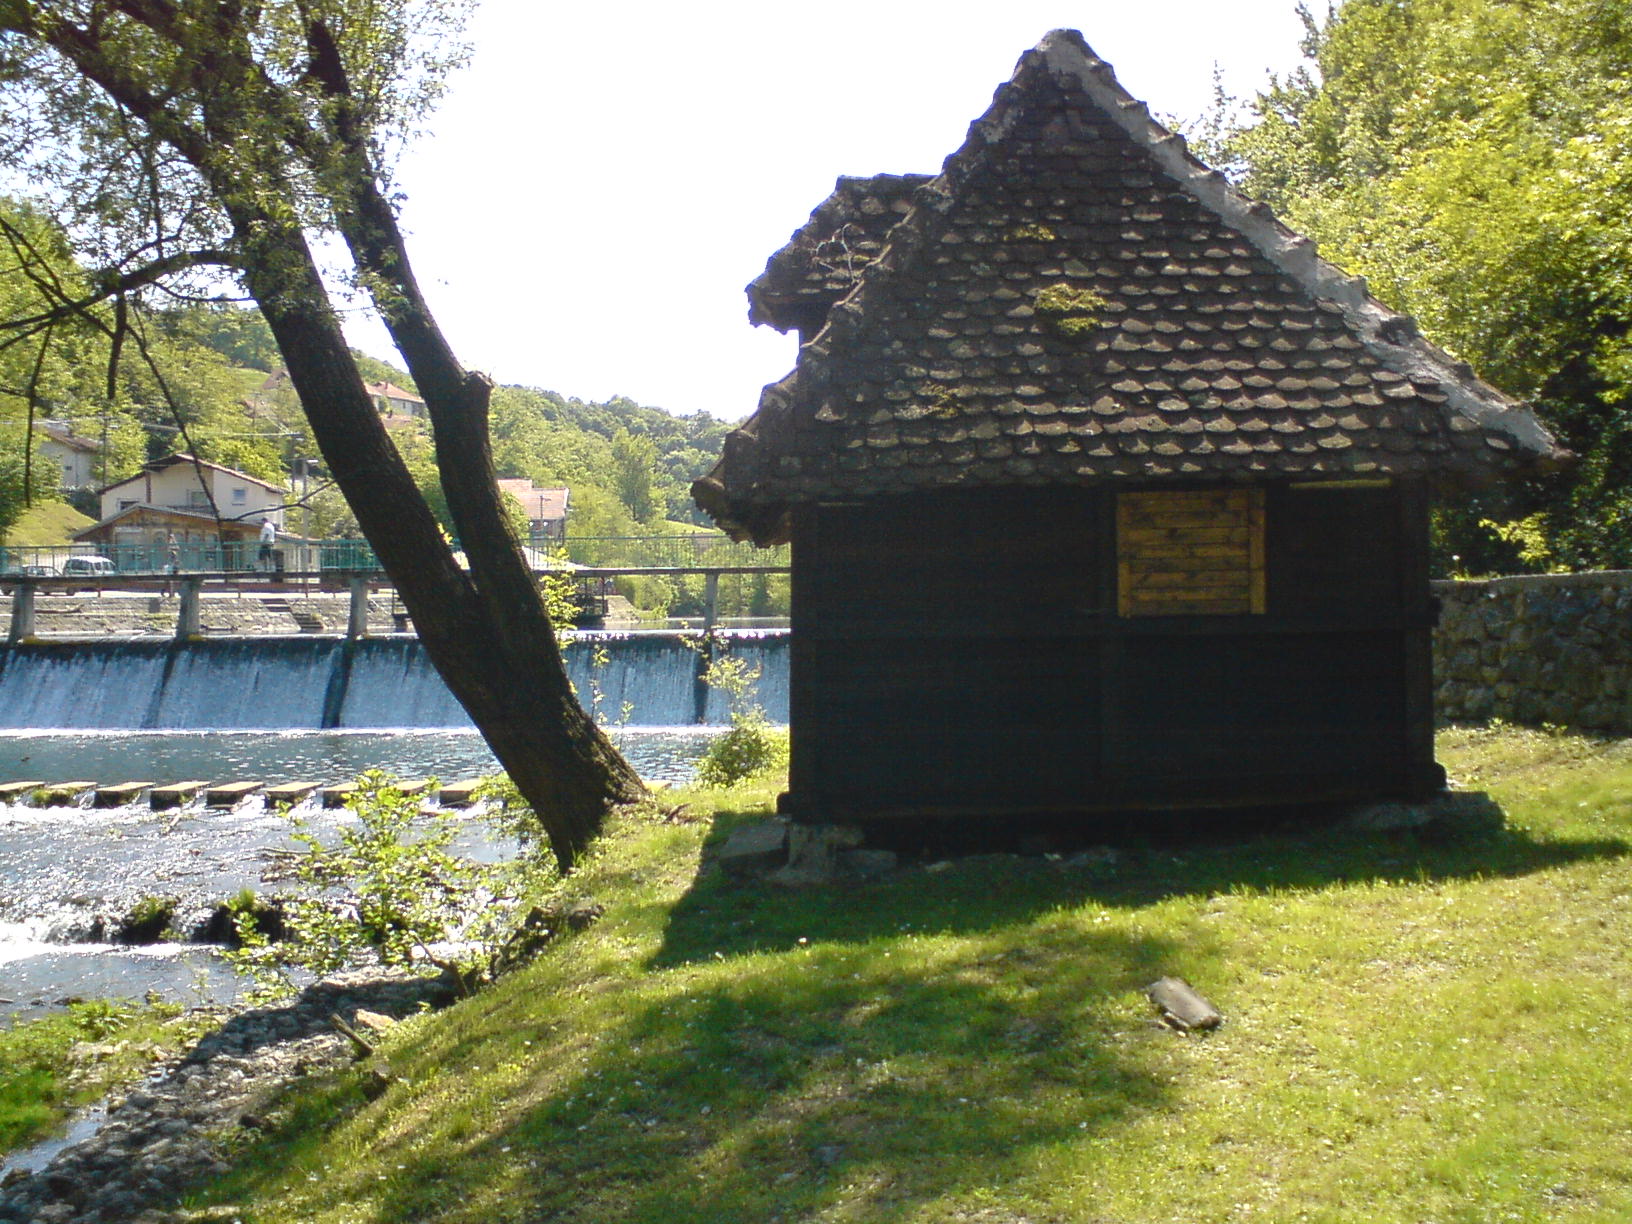 File:Old wooden shack.jpg - Wikimedia Commons